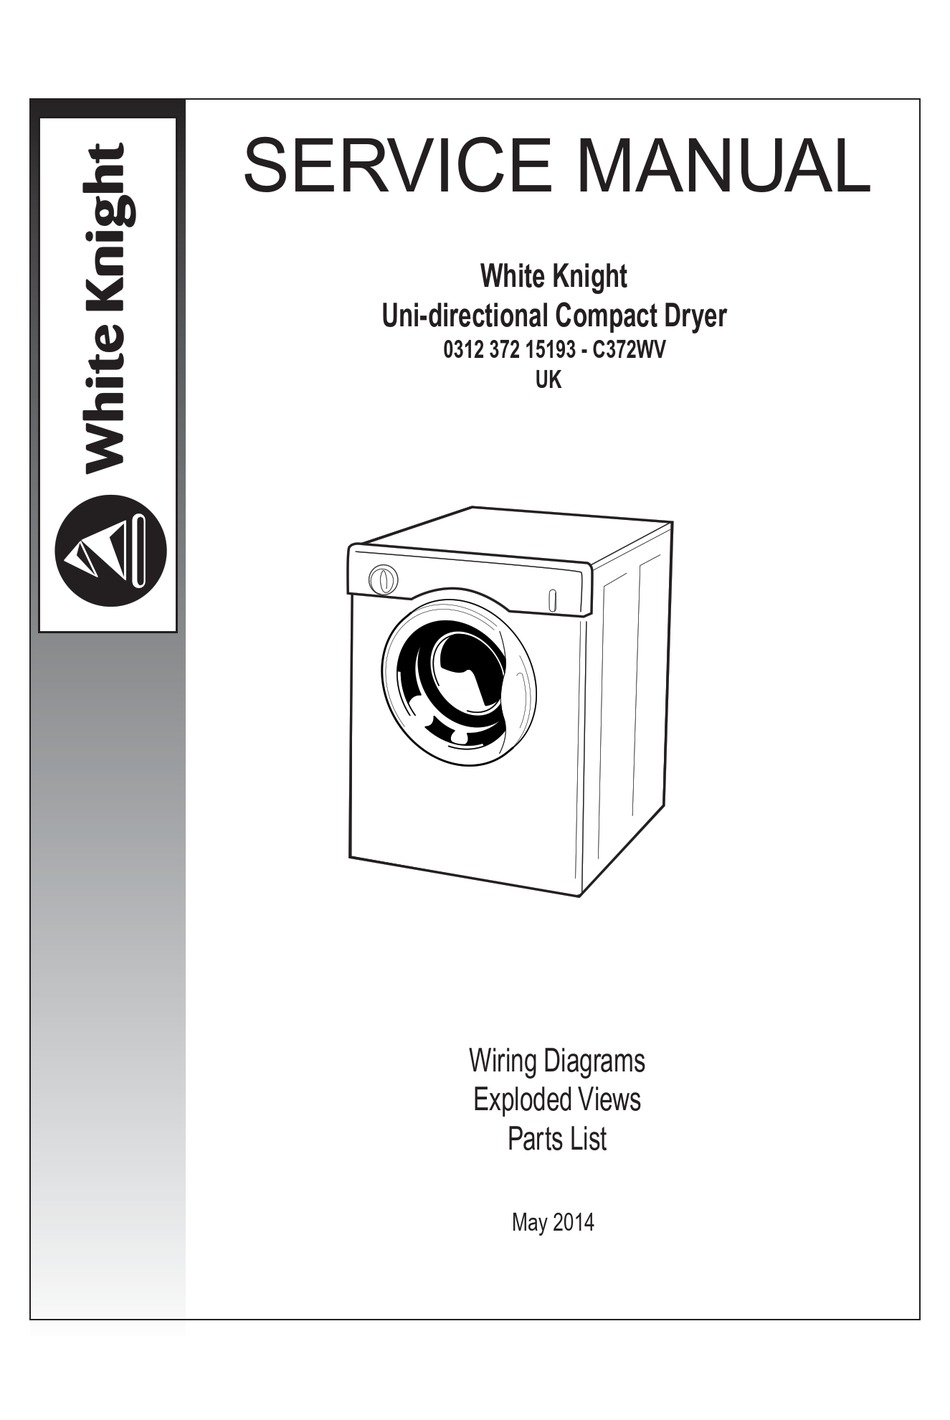 White Knight C372wv Service Manual Pdf